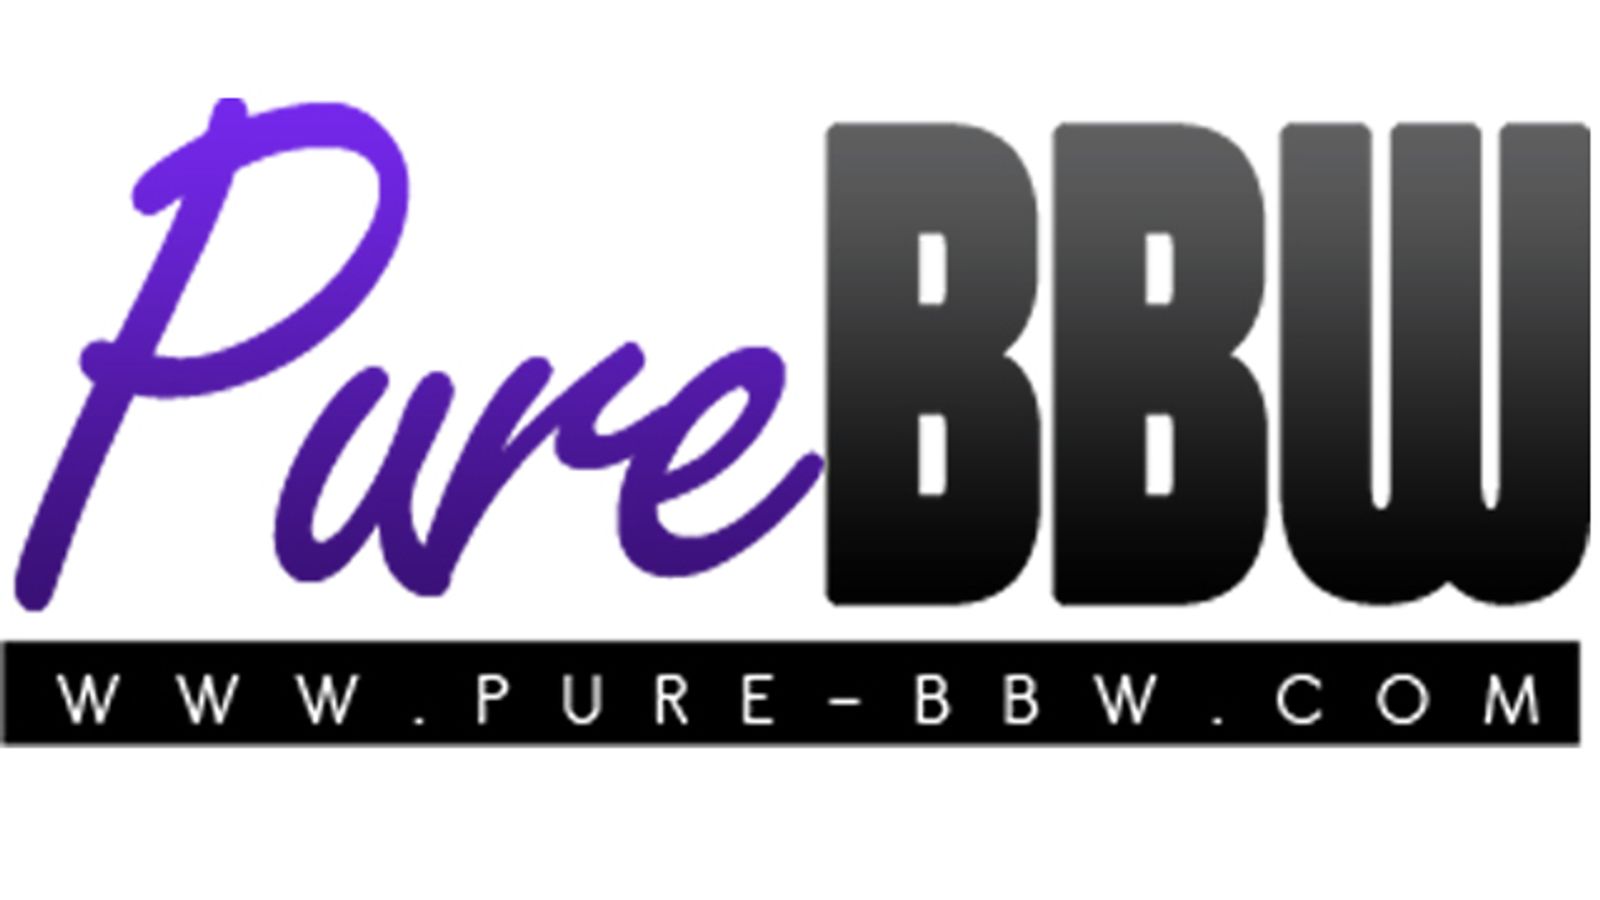 Christian XXX Launches Pure-BBW.com